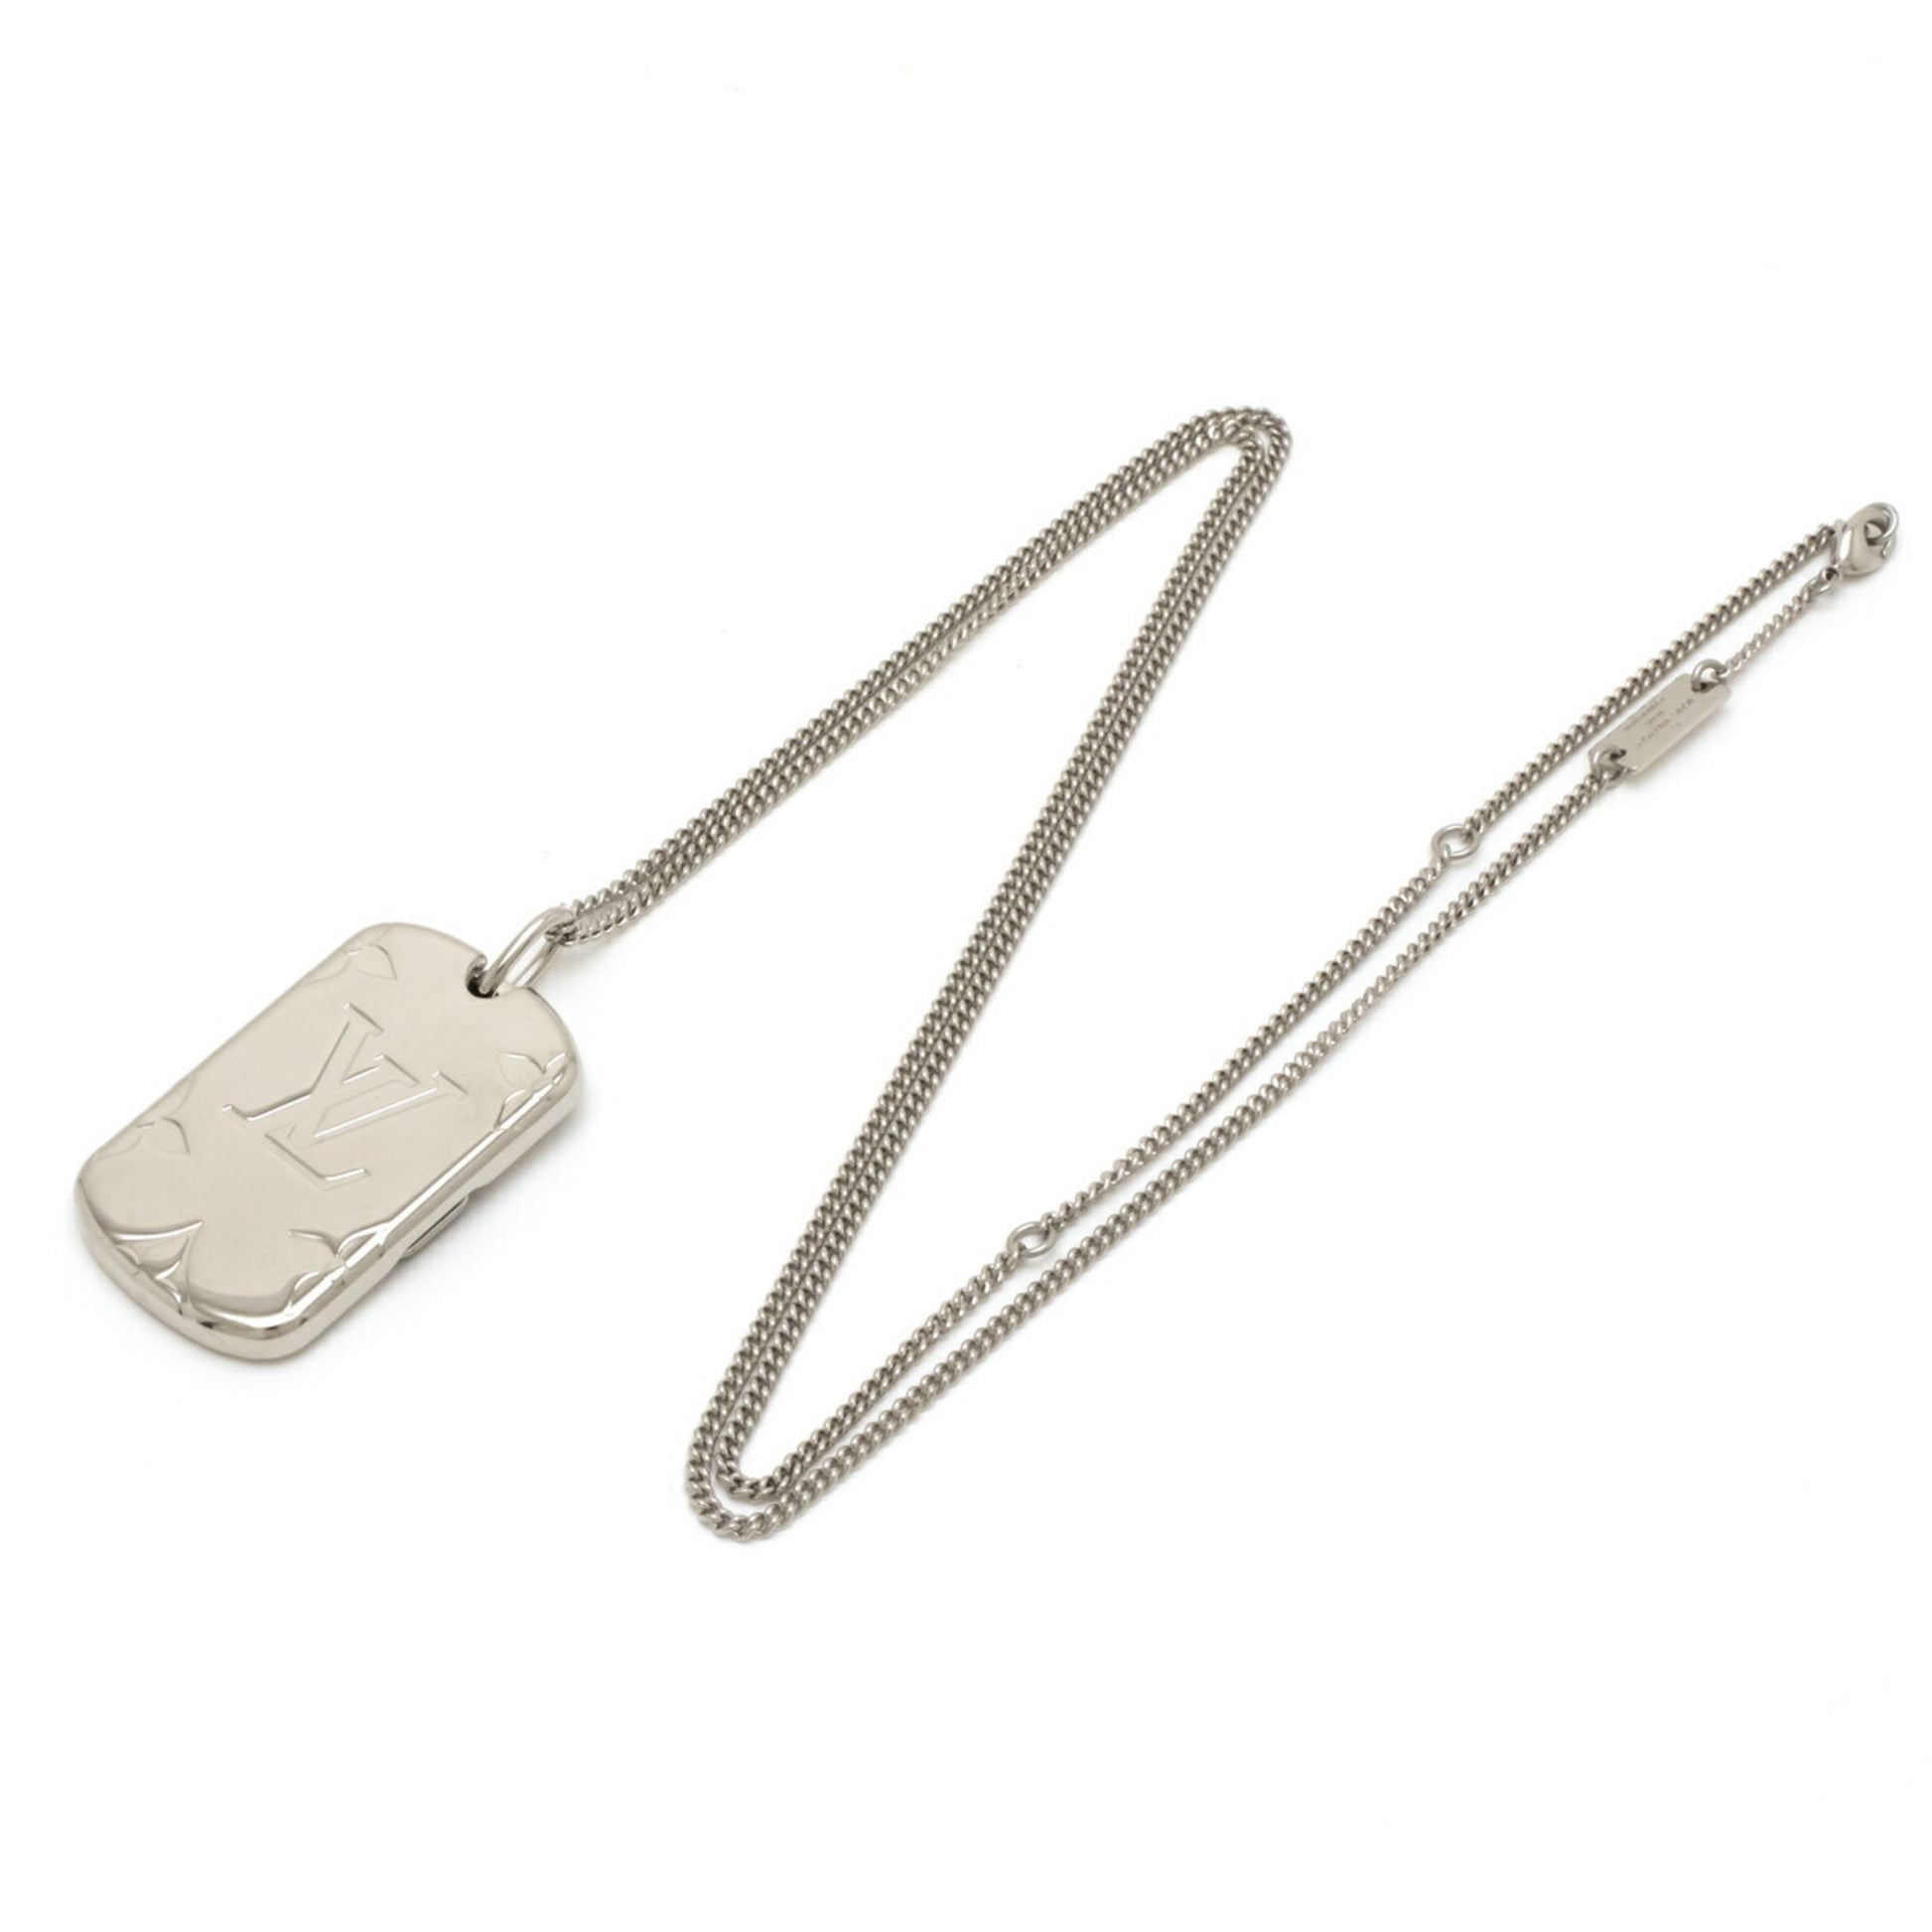 Louis Vuitton Monogram locket necklace (M62484)